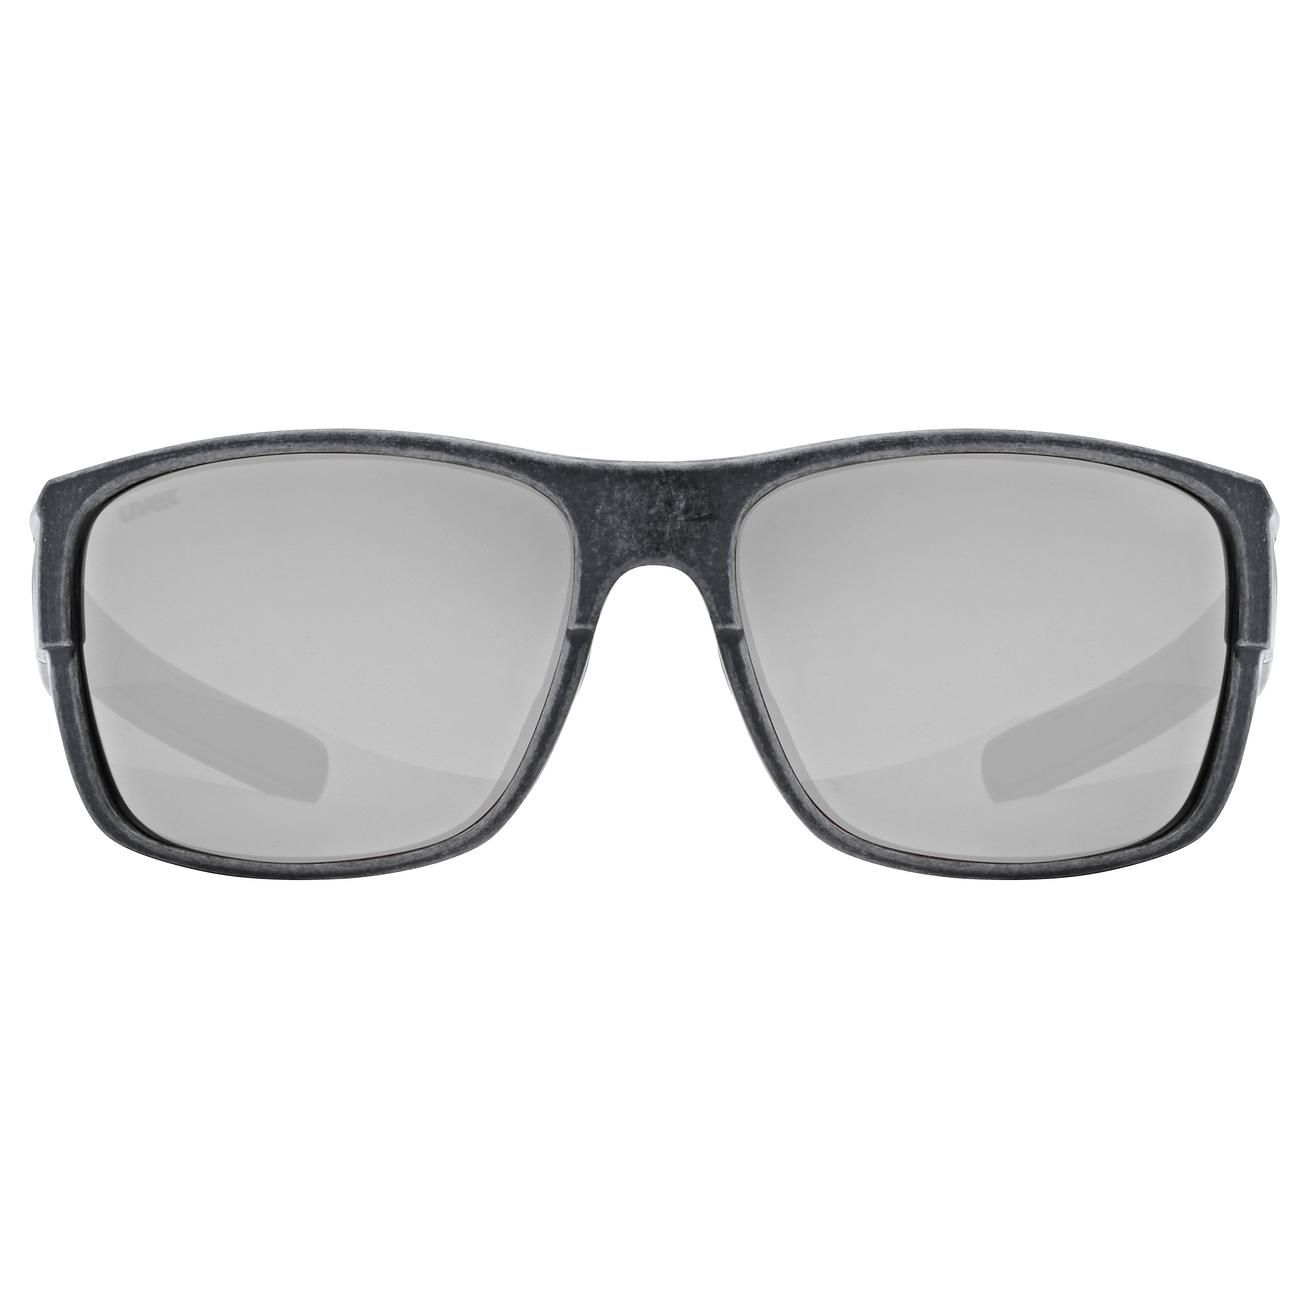 slnečné okuliare uvex esntl urban black matt/silver